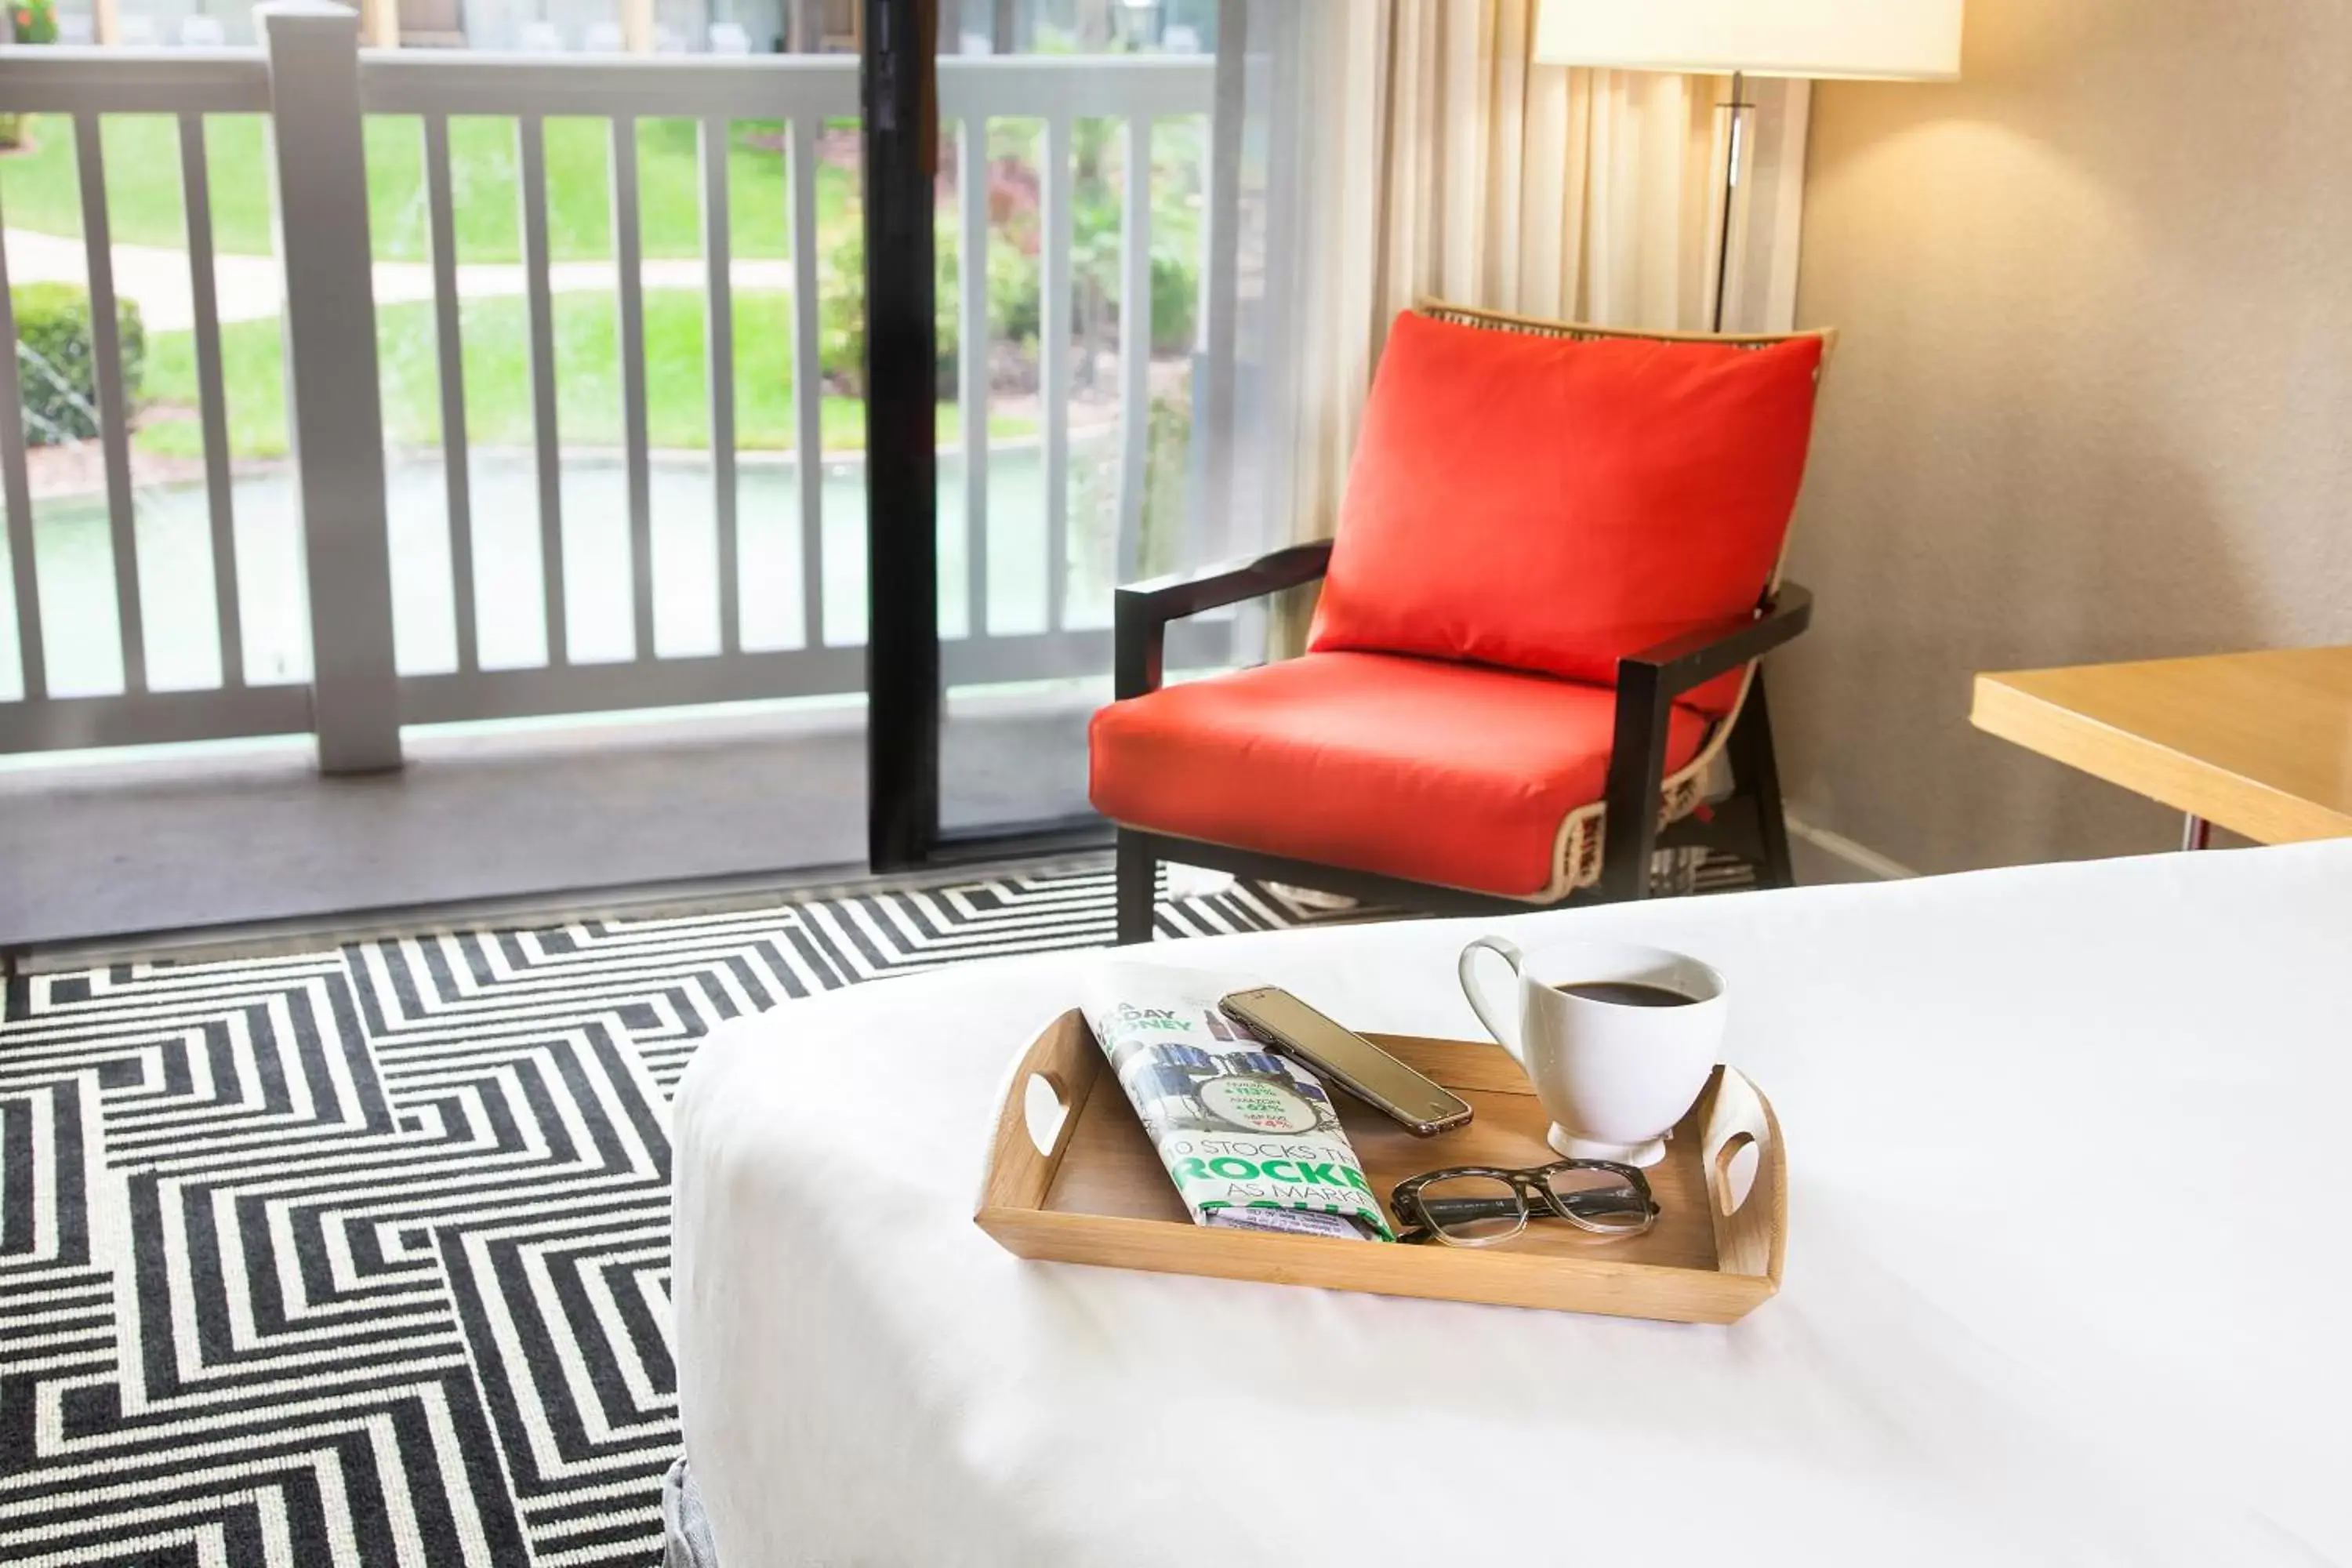 Bed in Wyndham Orlando Resort International Drive